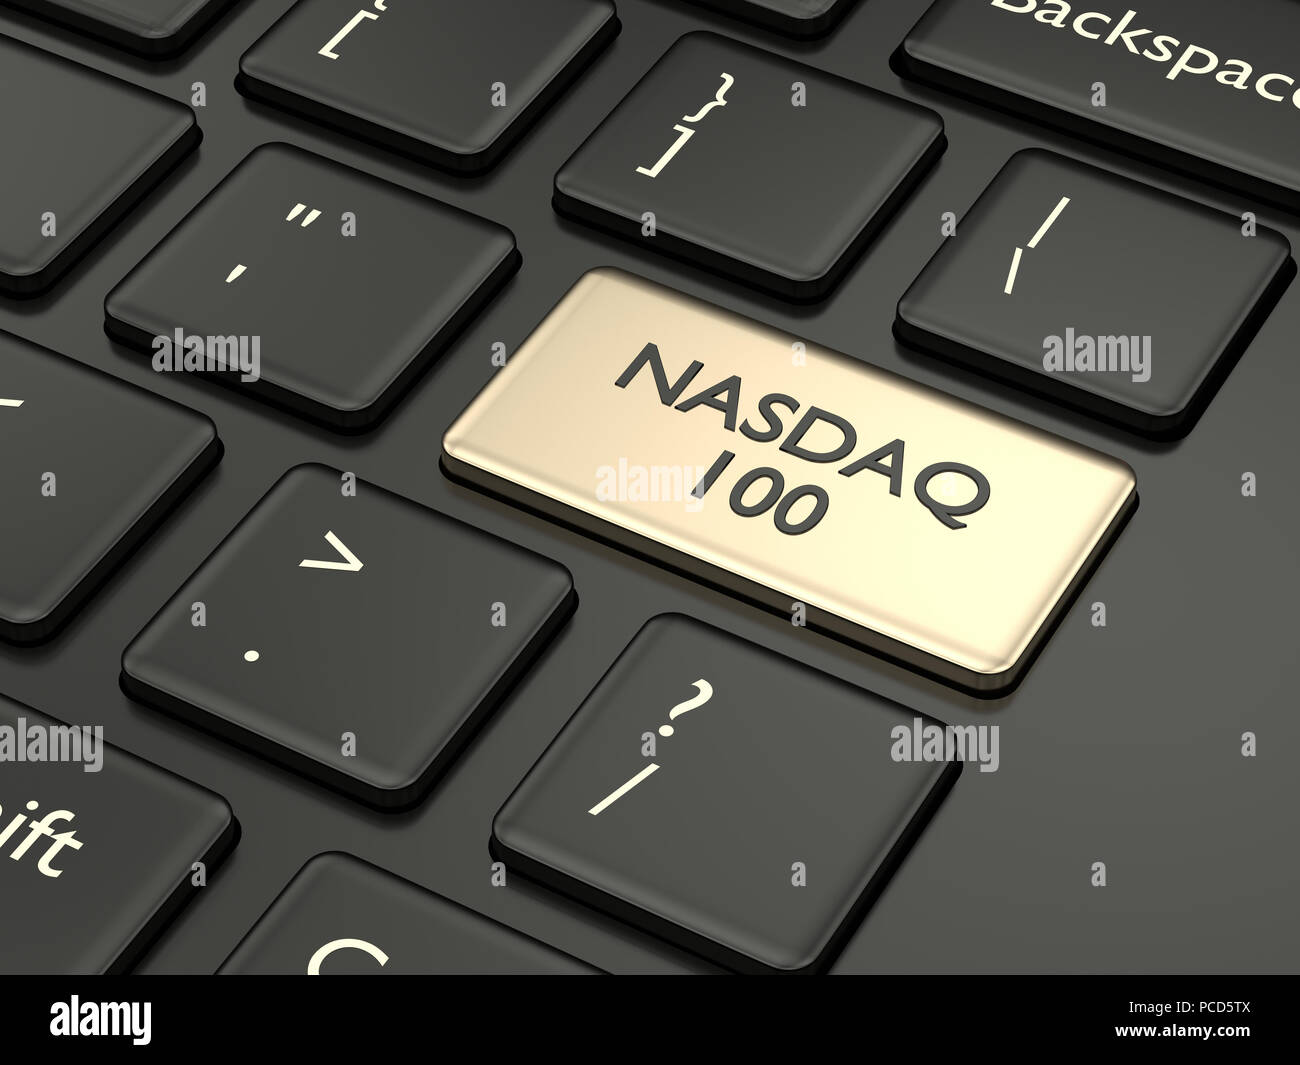 3d render closeup of computer keyboard with NASDAQ 100 index button. Stock market indexes concept. Stock Photo